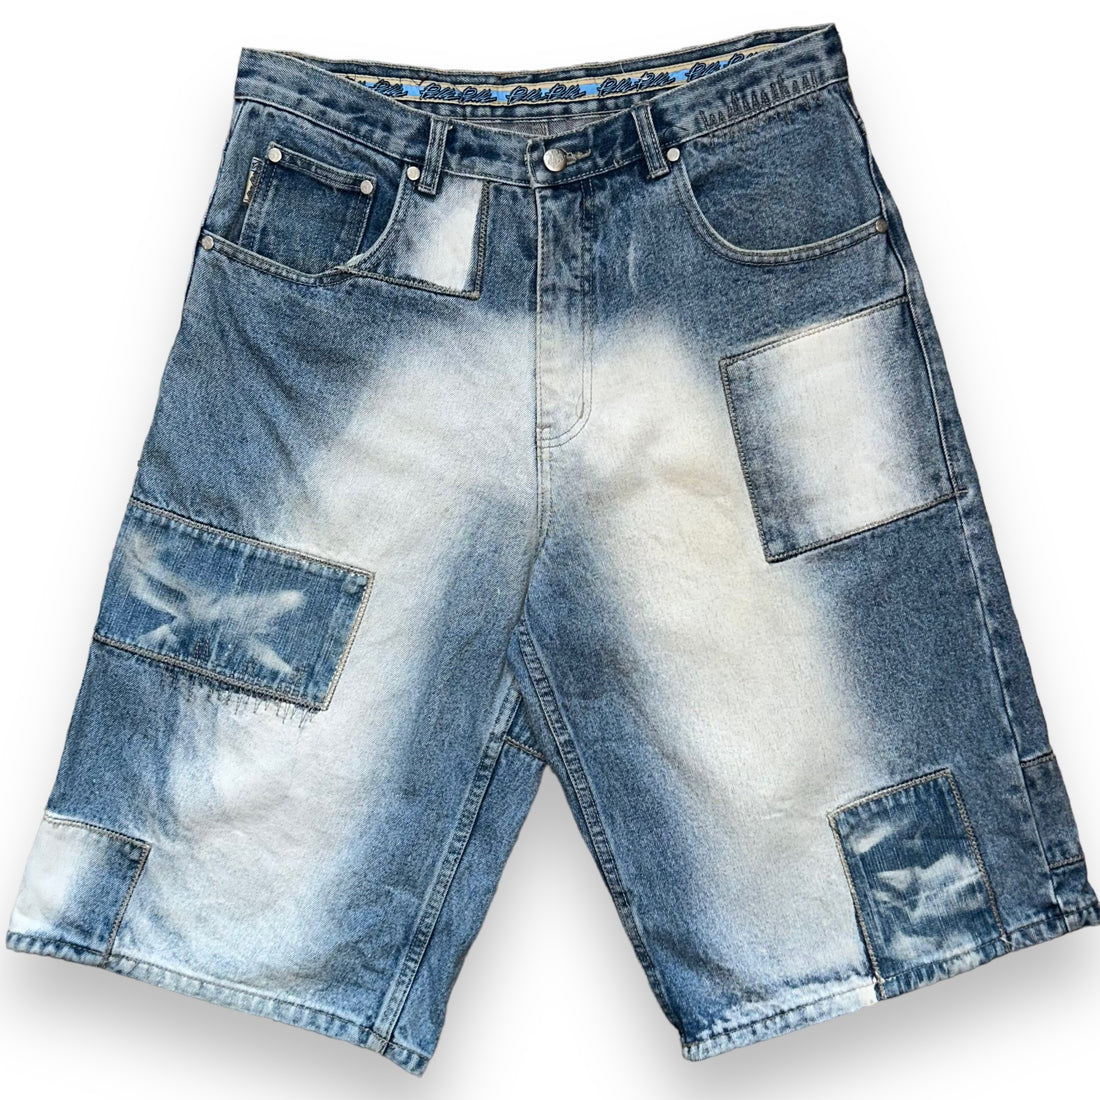 Vintage LEATHER Baggy Shorts (32 US M)